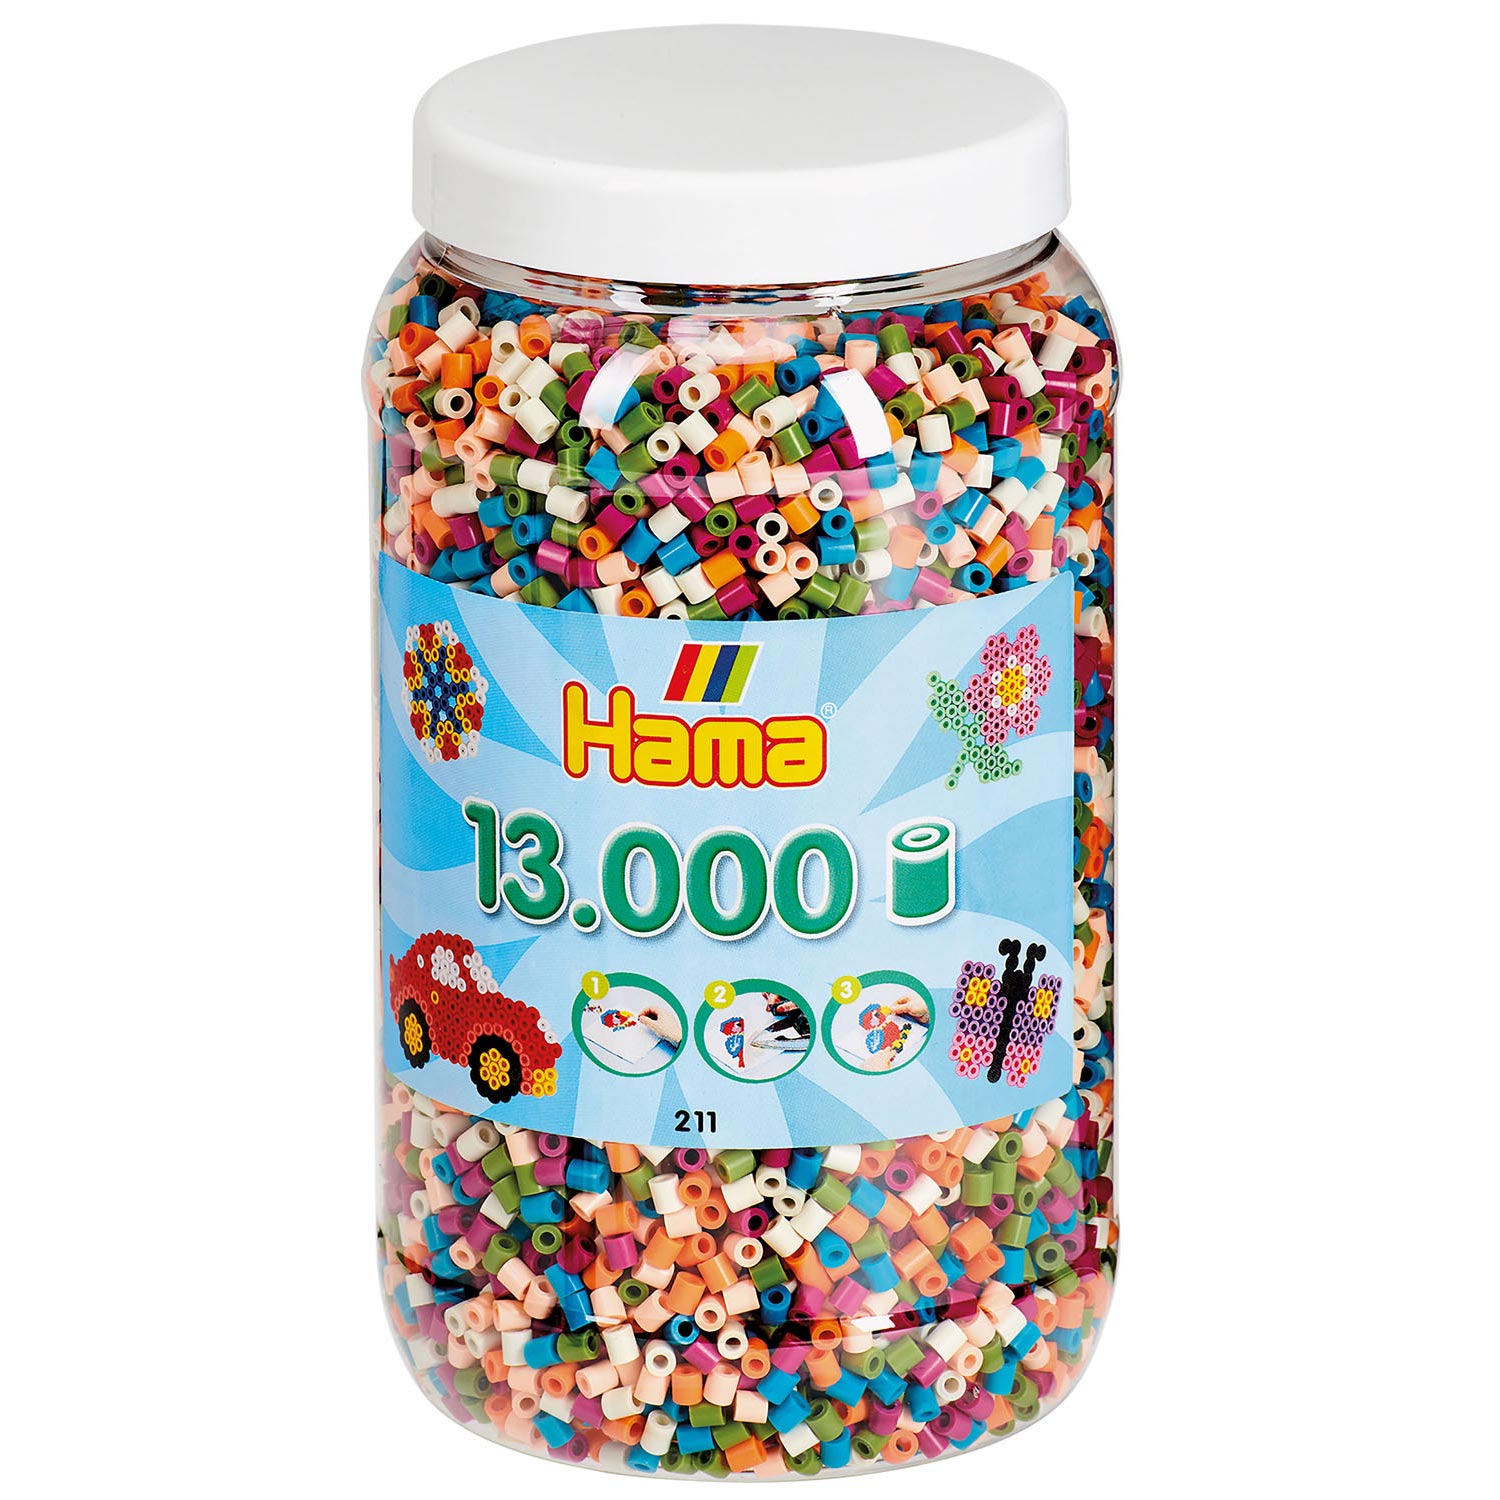 Hama Strijkkralen in Pot - Mix (58), 13.000st.